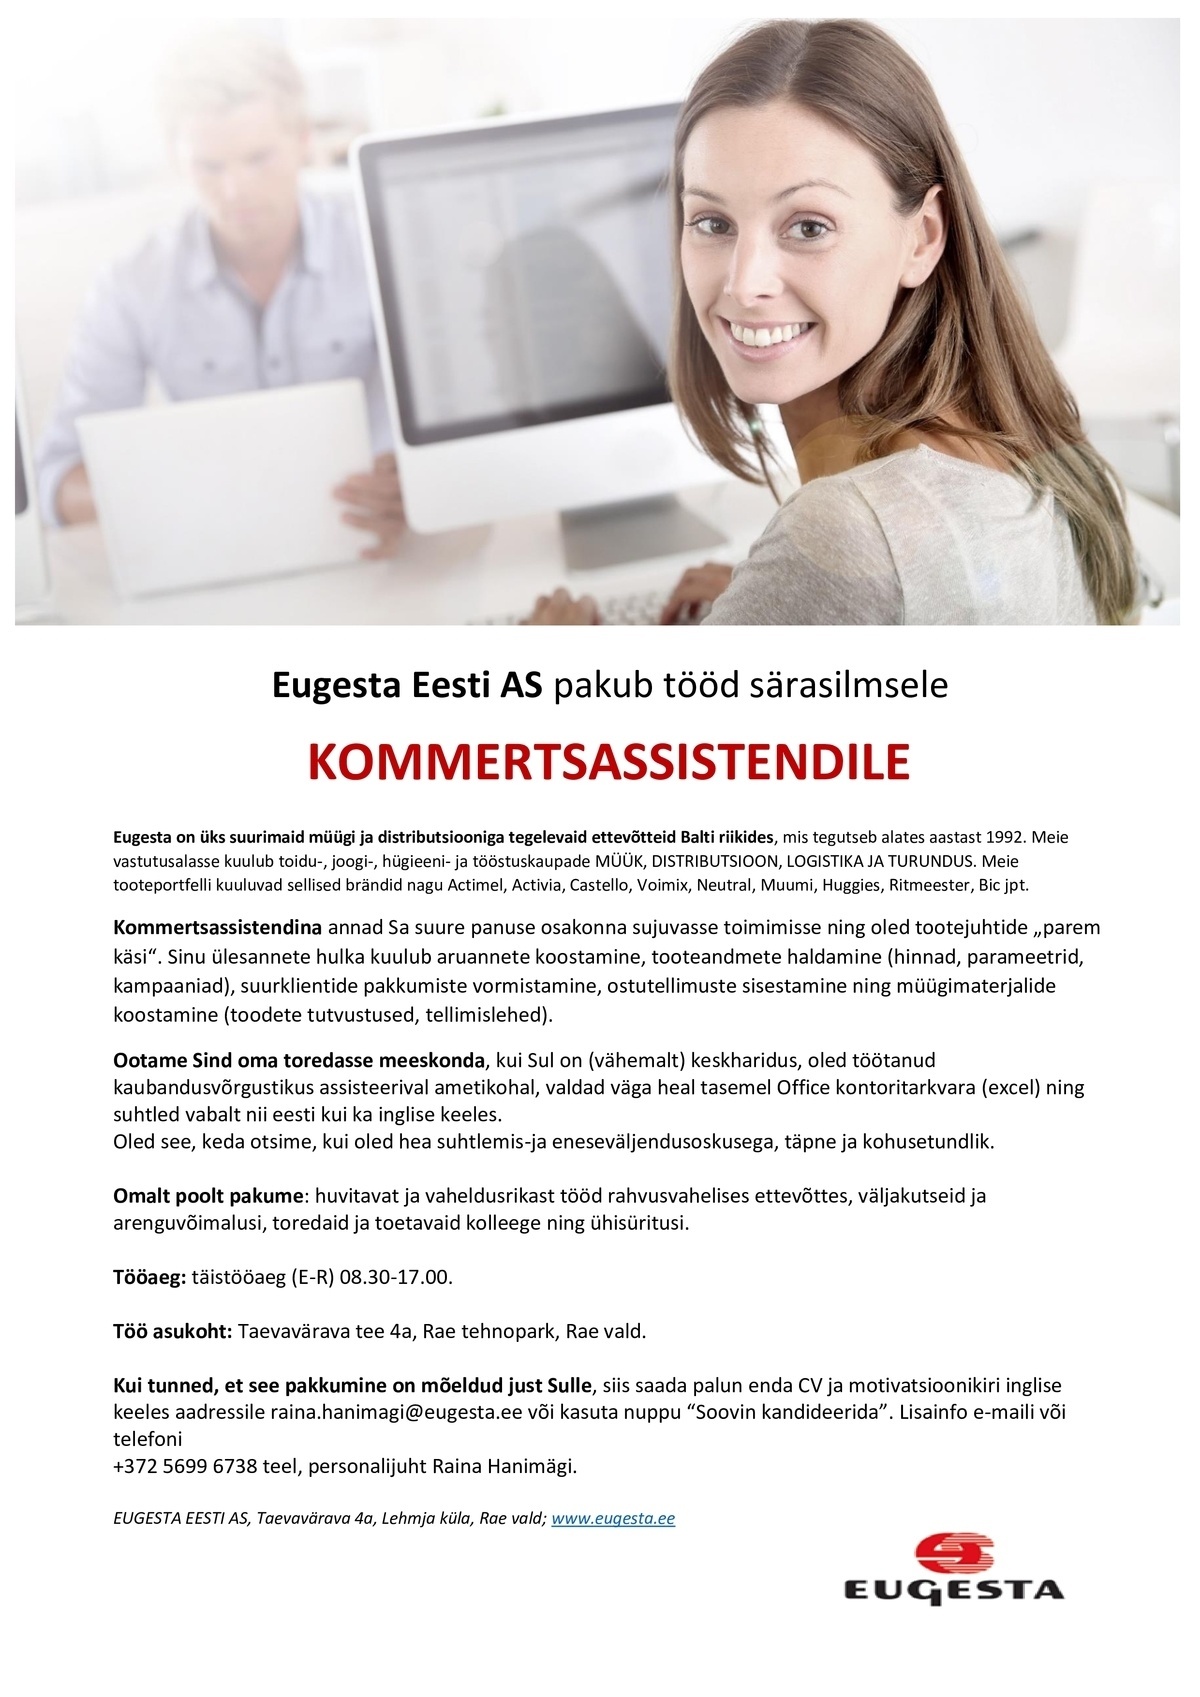 Eugesta Eesti AS Kommertsassistent